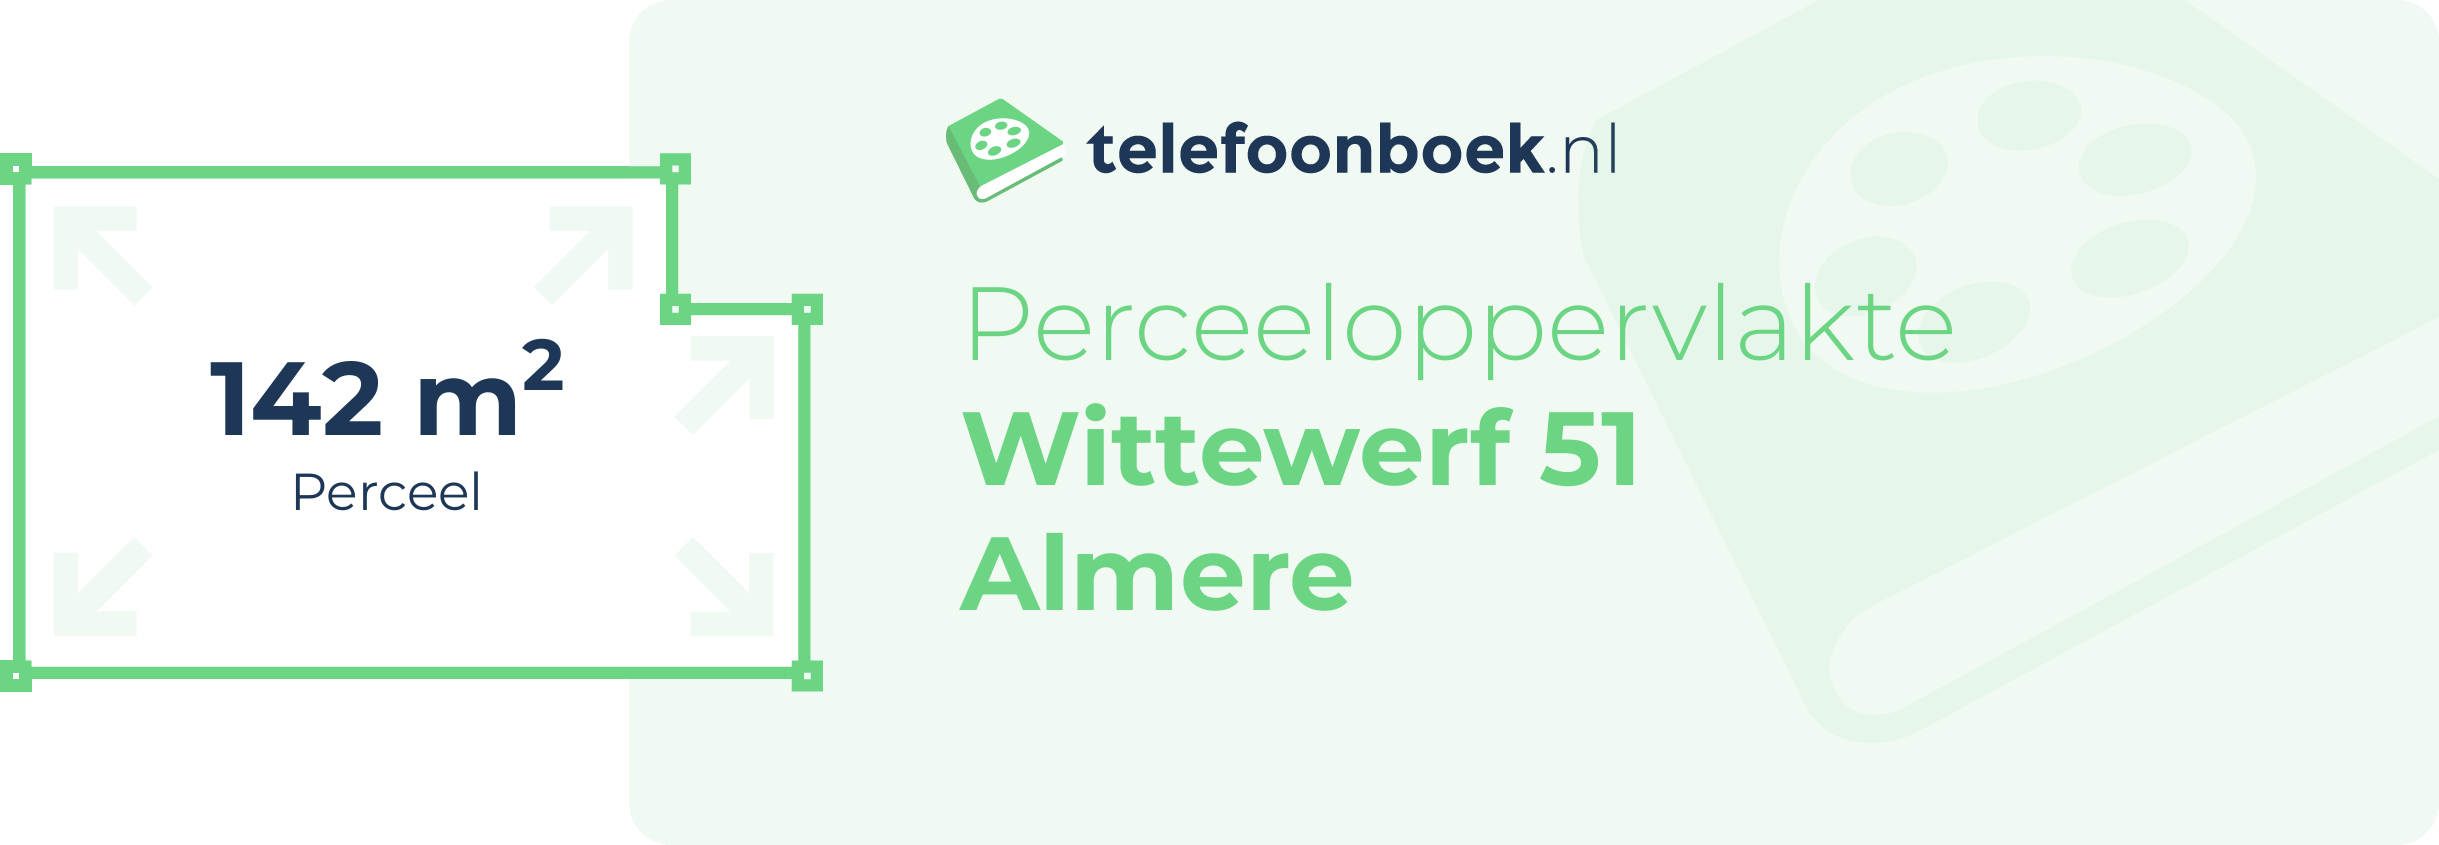 Perceeloppervlakte Wittewerf 51 Almere